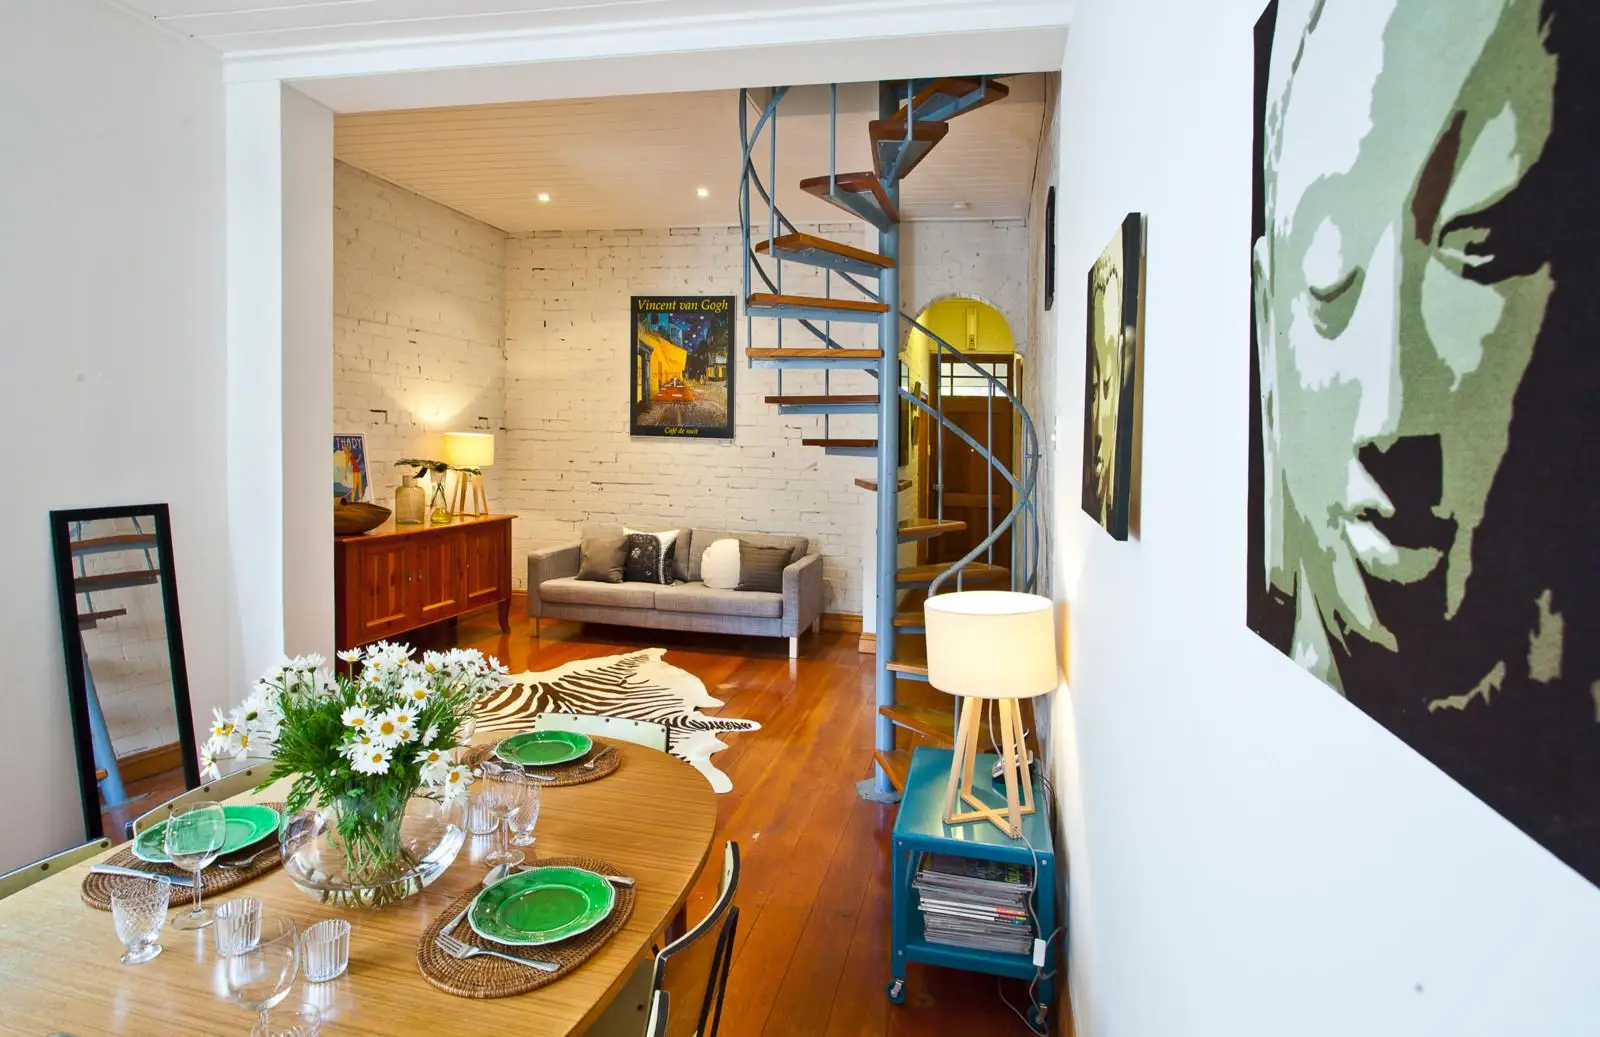 71 Kepos Street, Redfern Sold by Sydney Sotheby's International Realty - image 1